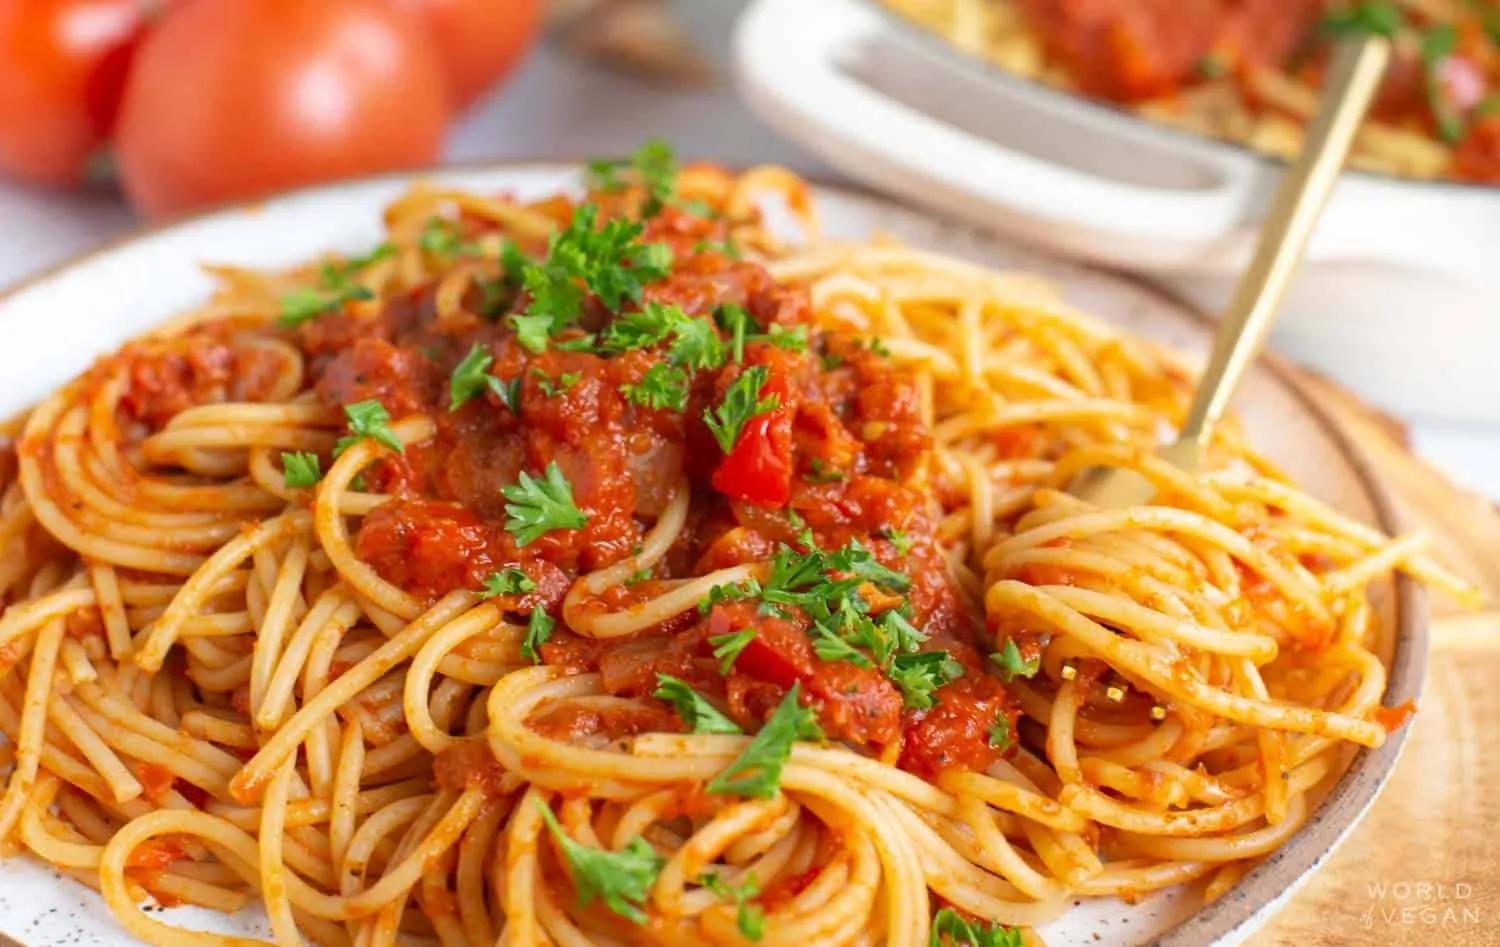 Spaghetti Arrabiata {How to Make the Perfect Spicy Arrabbiata Pasta Sauce}